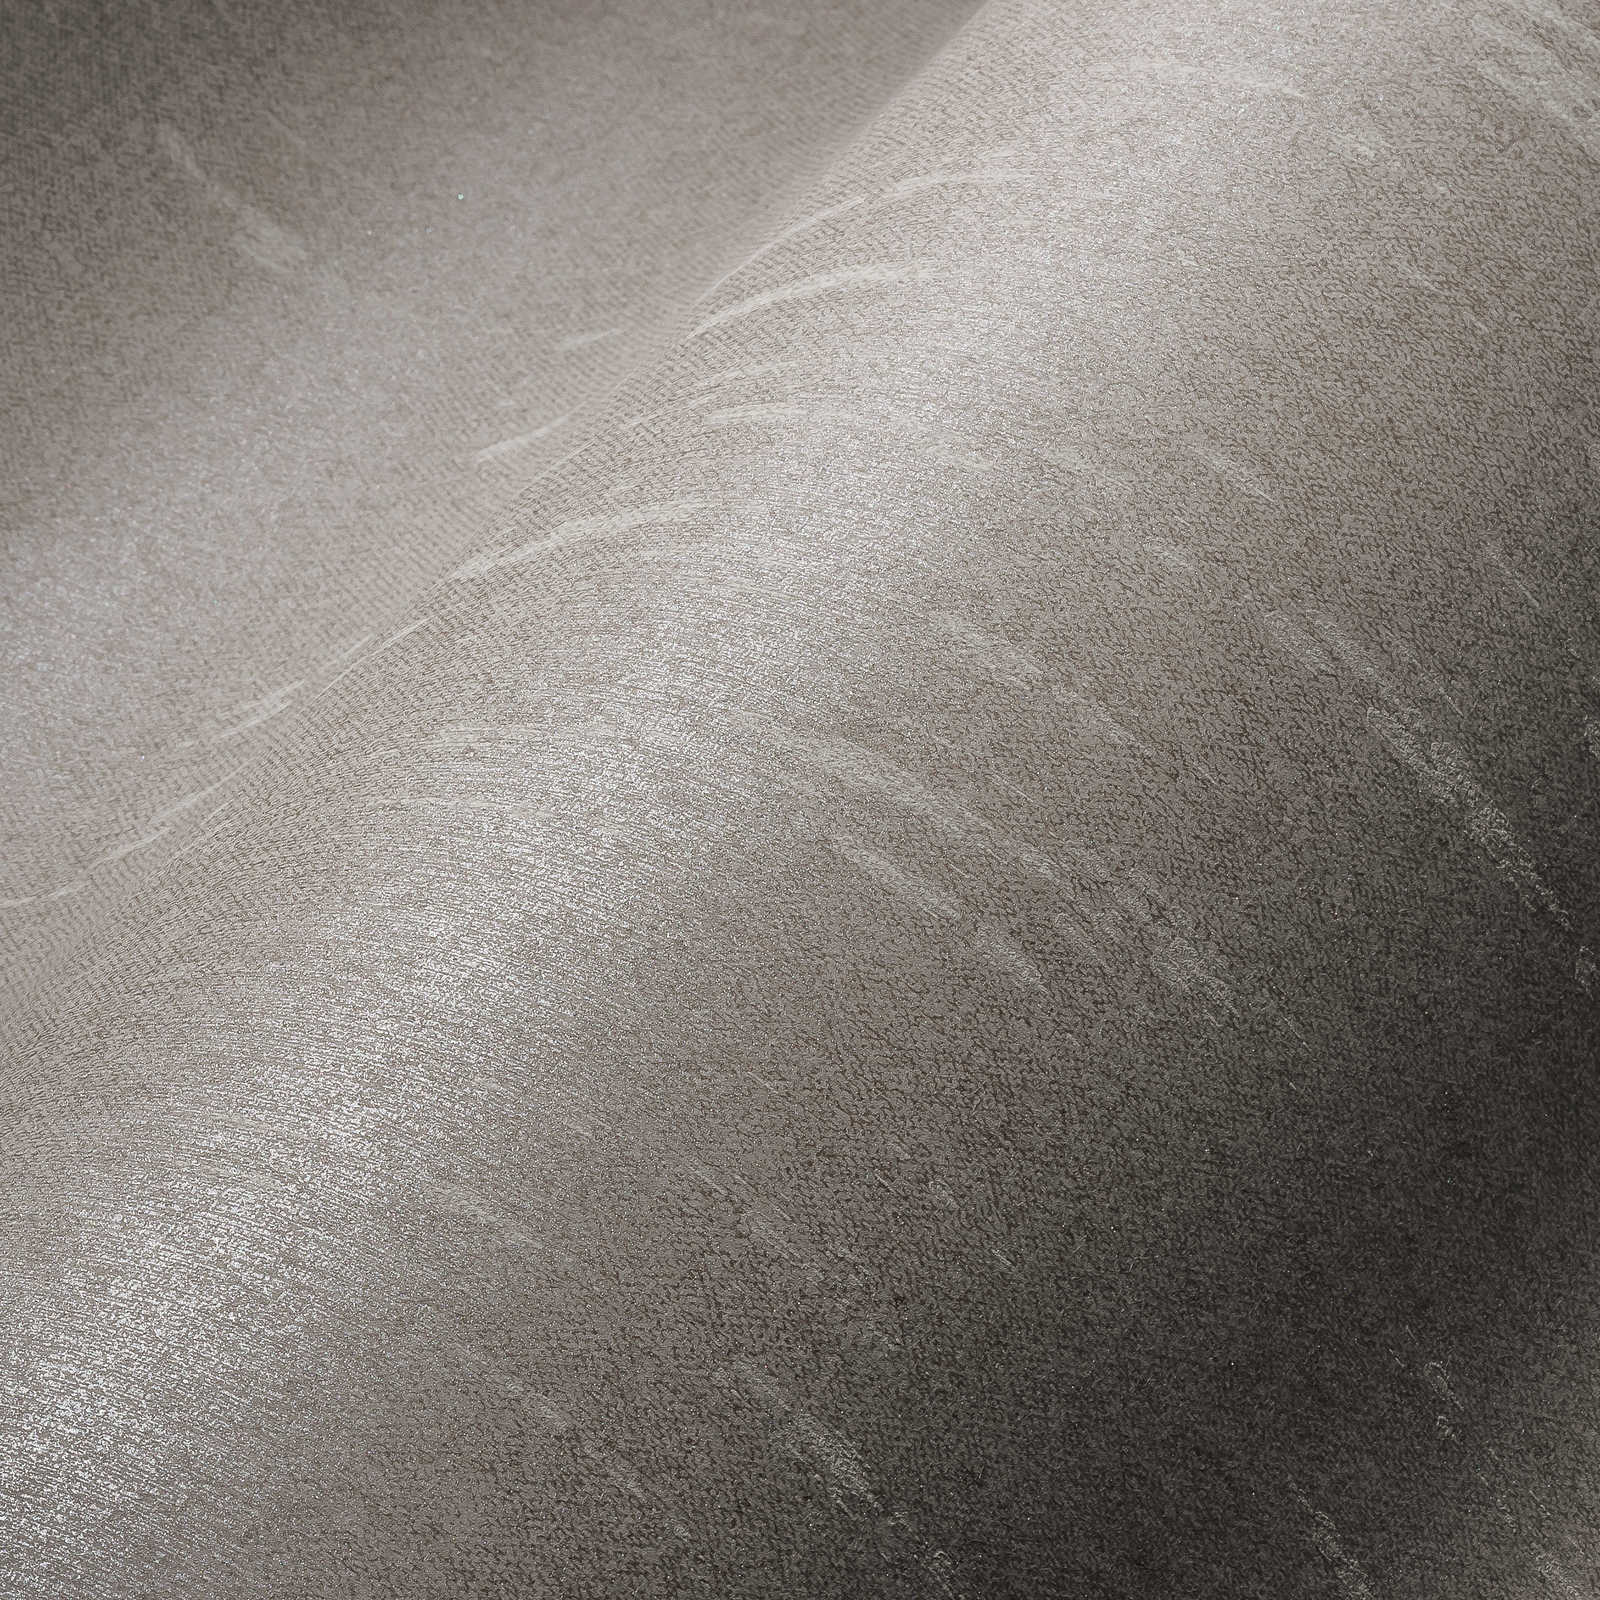             Einfarbige Tapete Silbergrau mit Bouclé Effekt – Grau
        